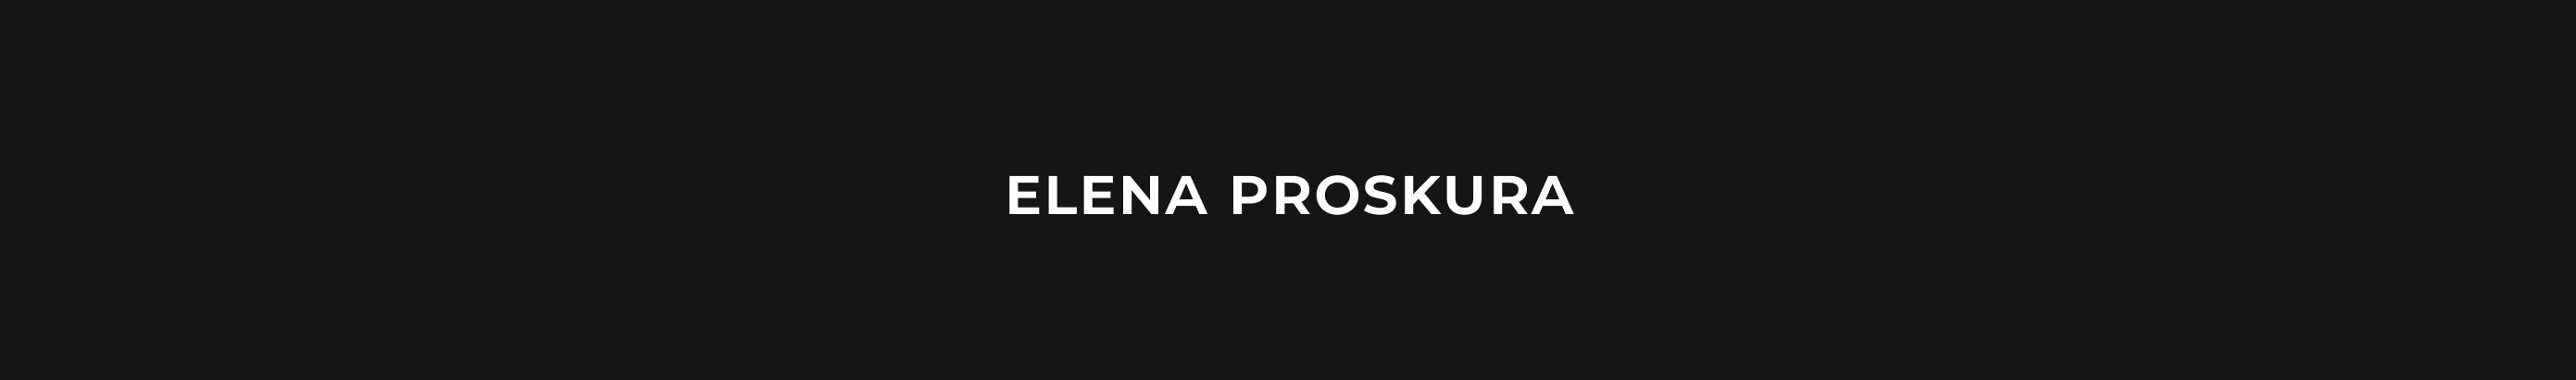 Elena Proskura's profile banner